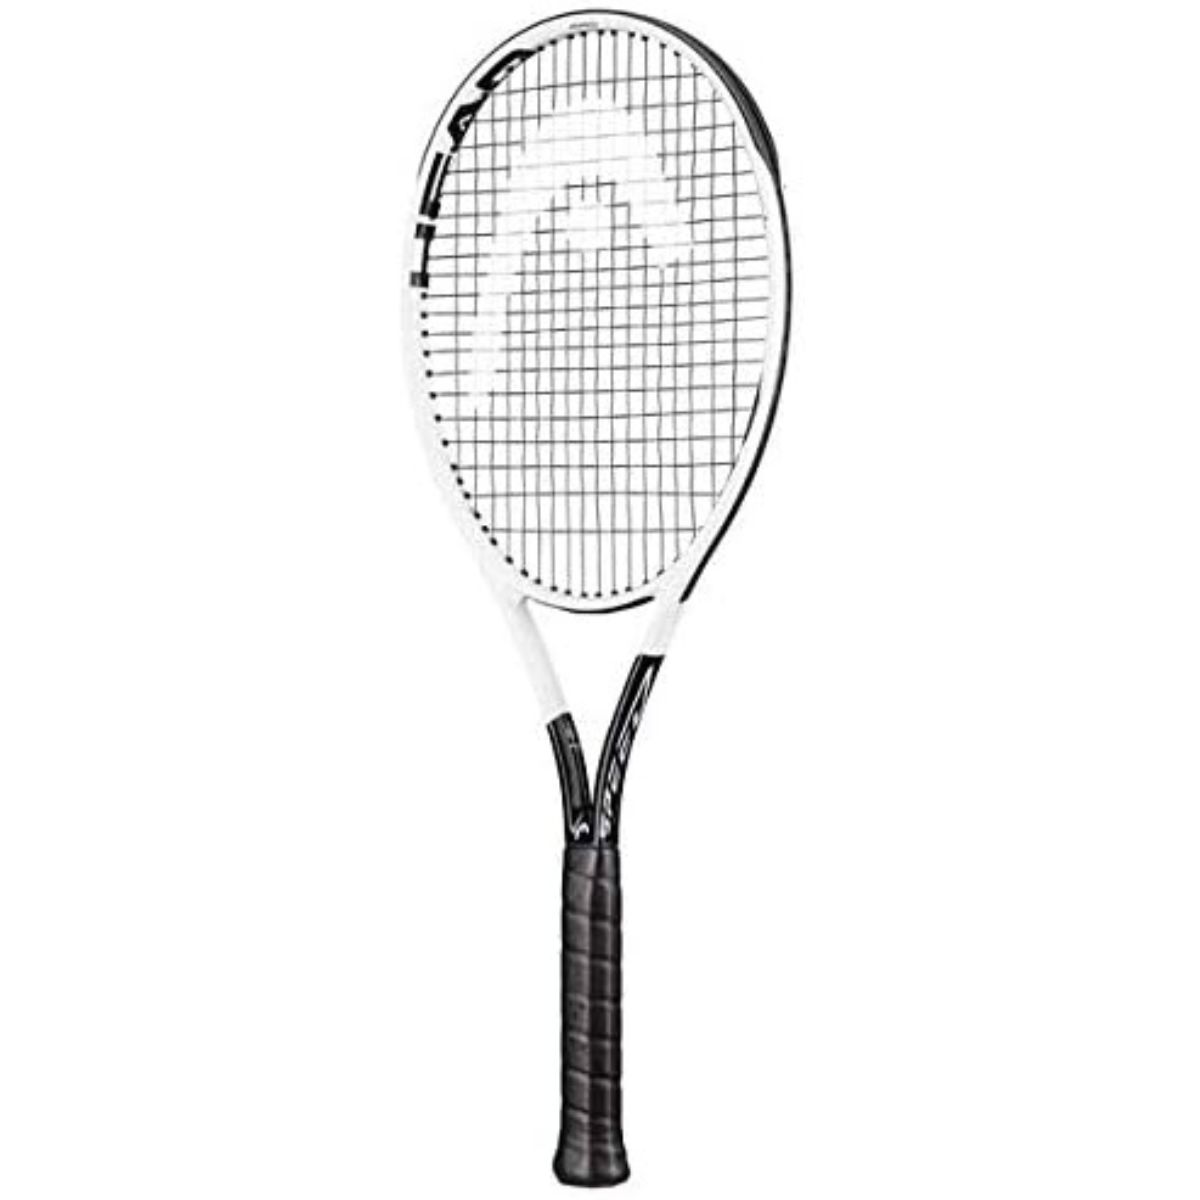 3 Avaiable Head Metallix Airflow 1 Tennis Racket New in Packaging Grip 3 